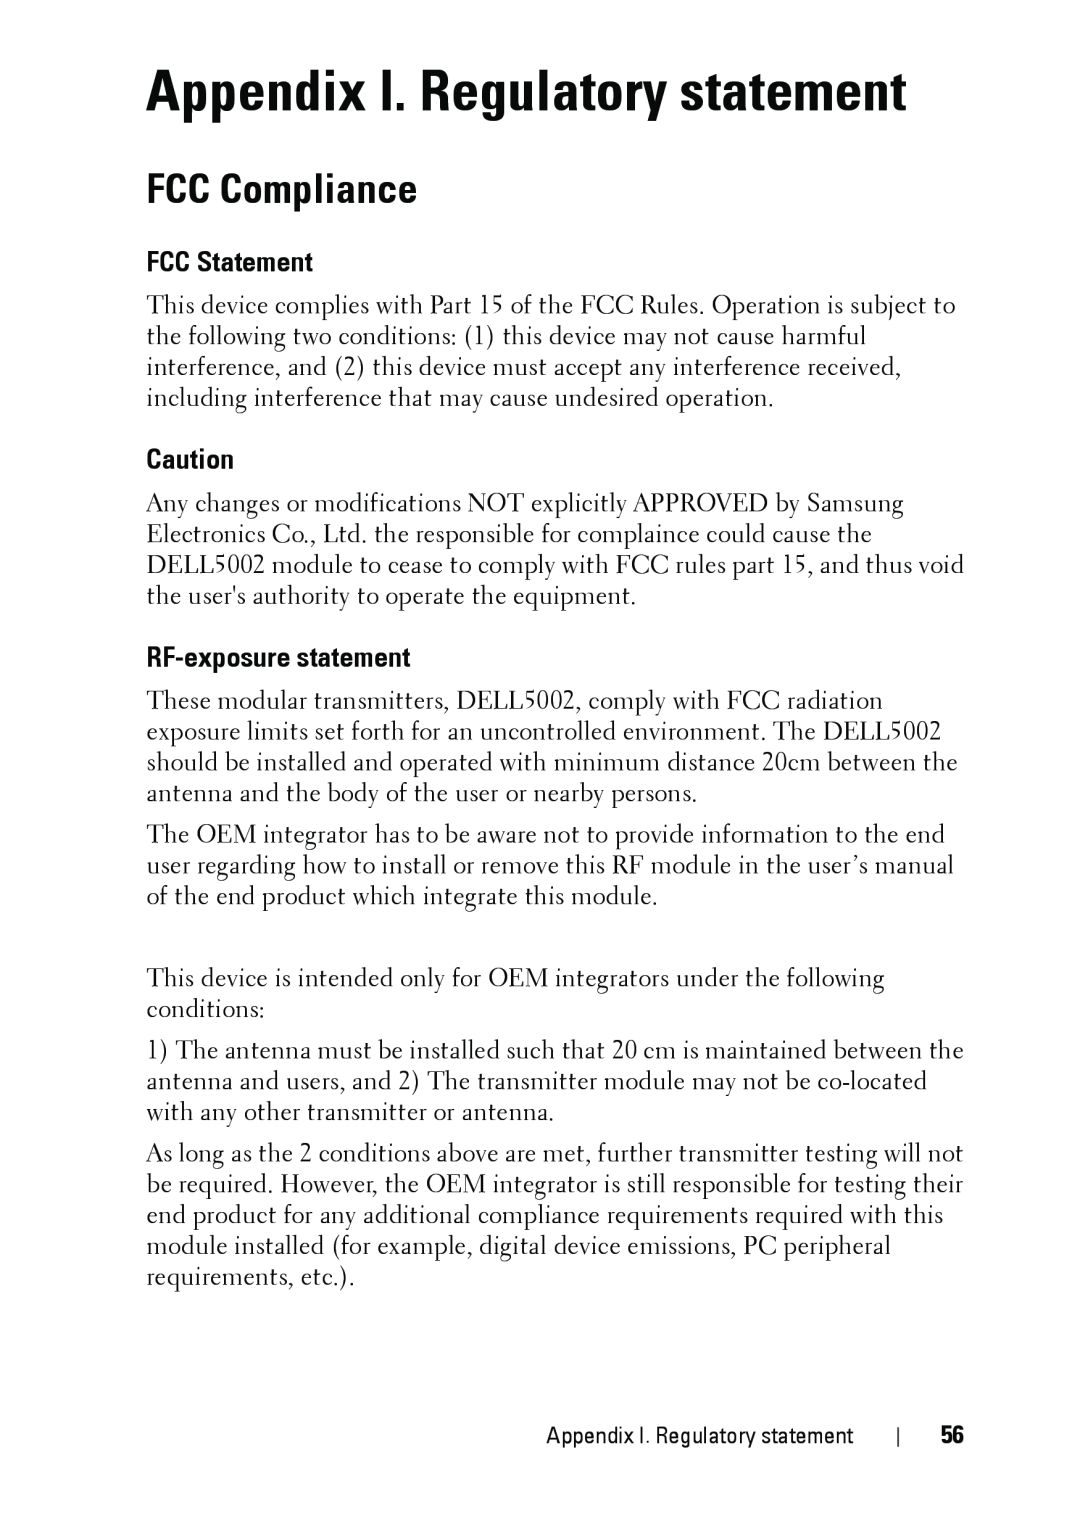 Dell 5002 manual Appendix I. Regulatory statement, FCC Compliance, FCC Statement, RF-exposure statement 